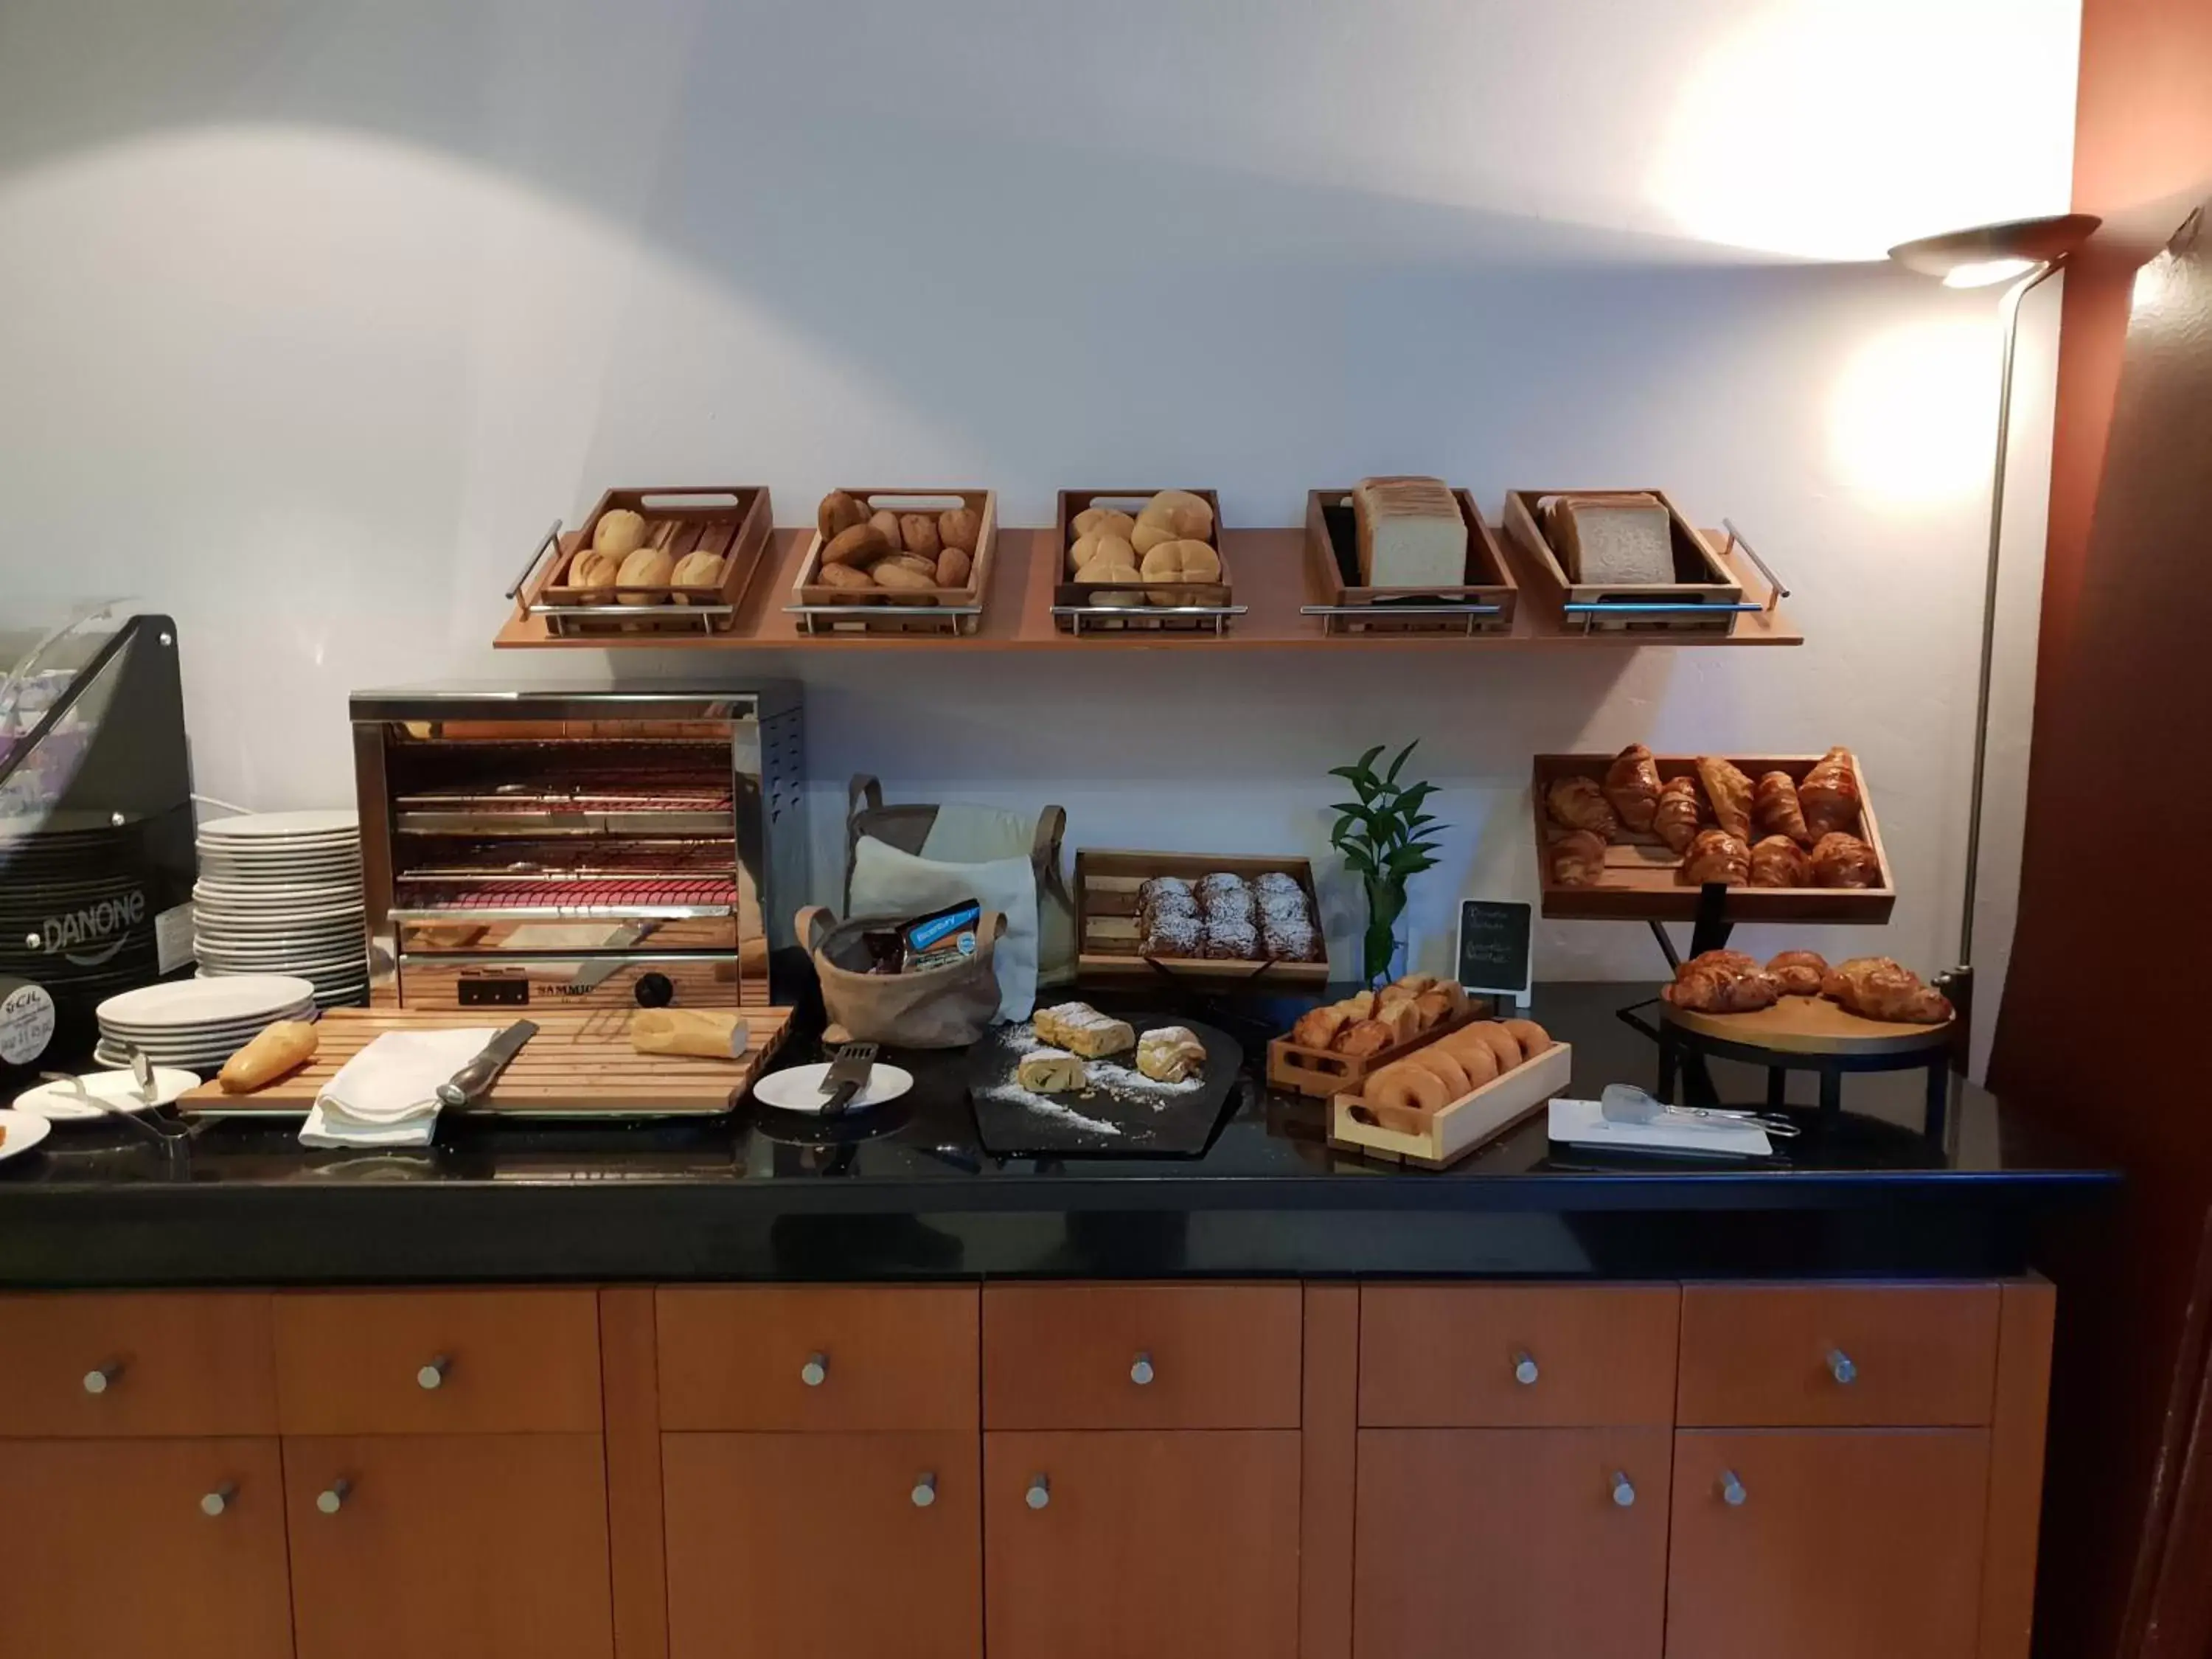 Buffet breakfast in Silken Sant Gervasi